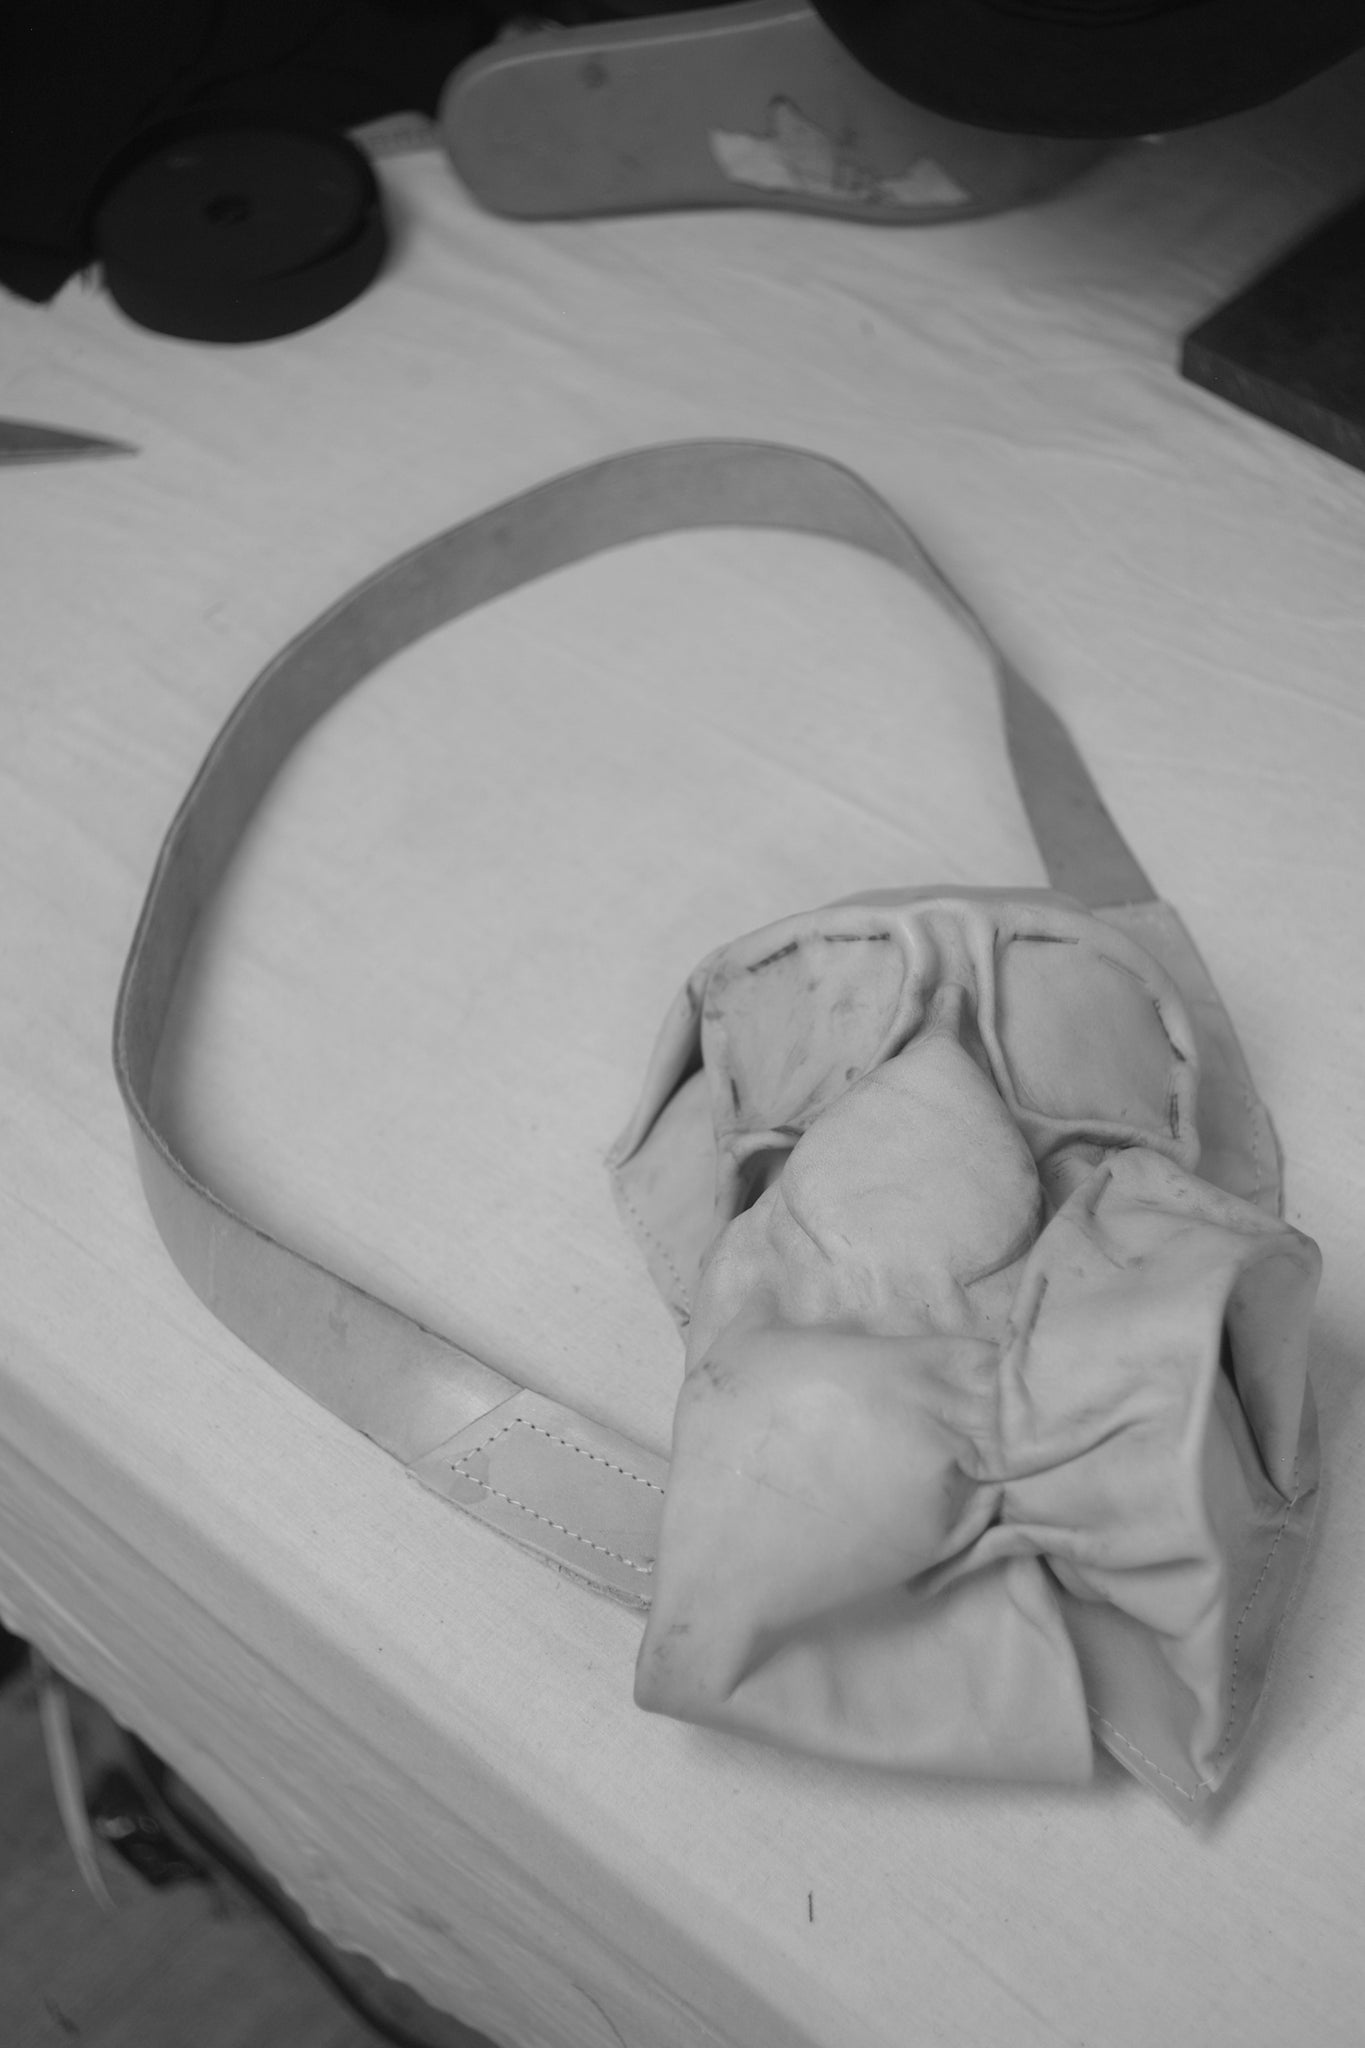 cowhide mask bag | prototype